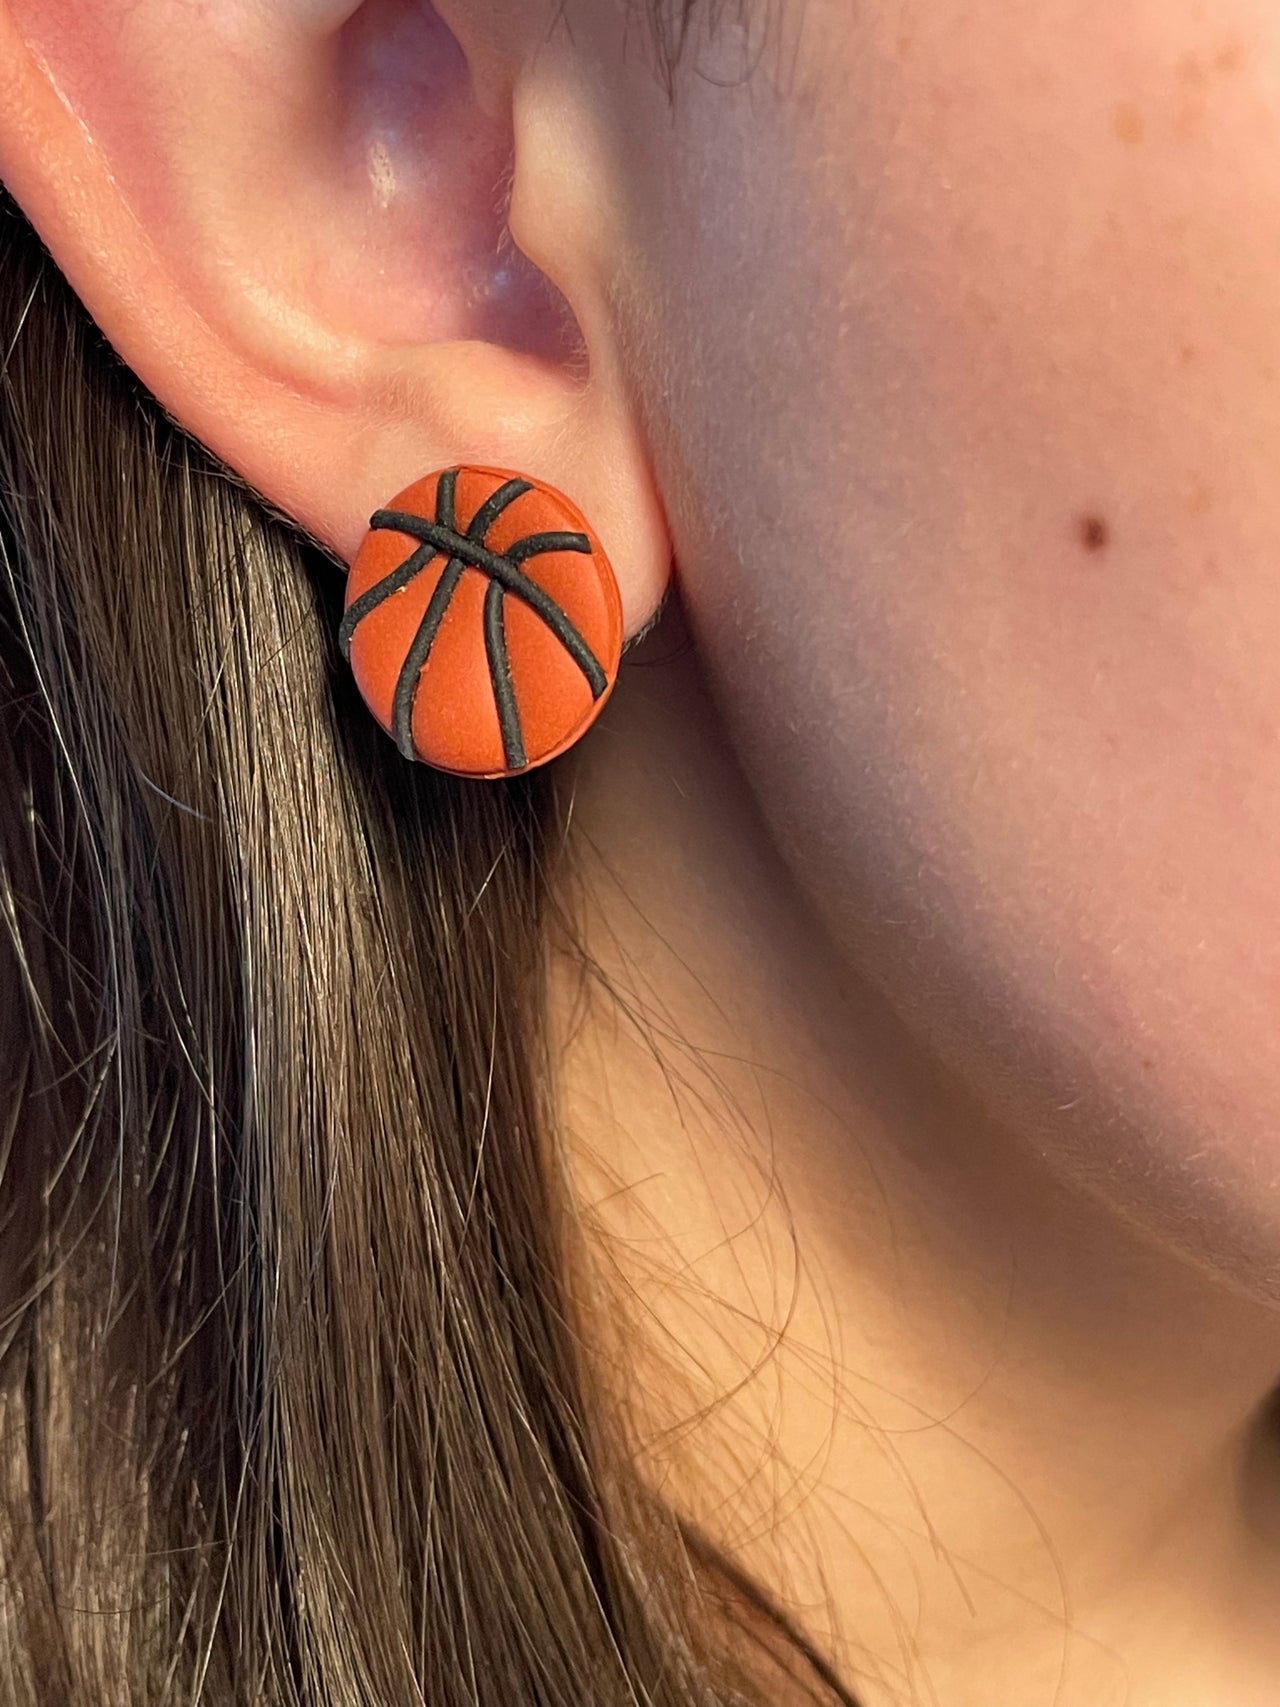 Sports Balls Painted Wood Stud Earrings *New New New* Earrings - Kim's Korner Wholesale Basketball